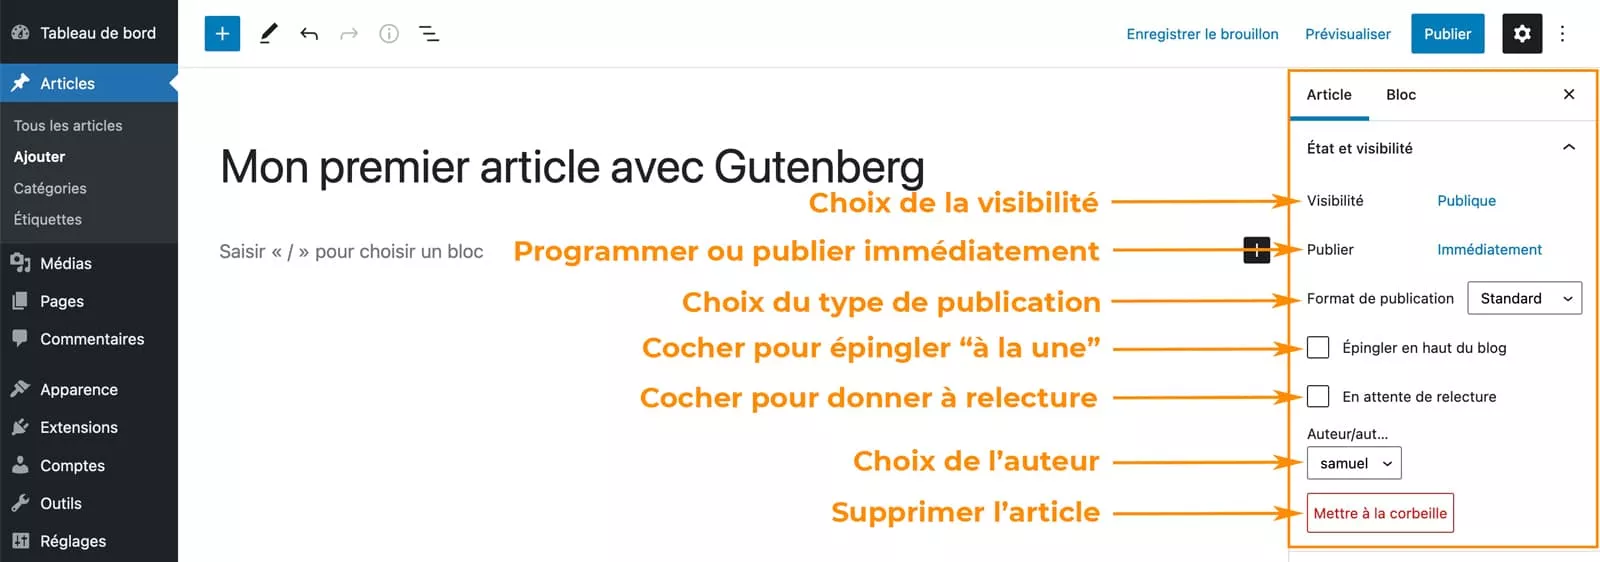 creer articles wordpress avec gutenberg 80 | Écrire des articles avec Gutenberg - Mode d'emploi